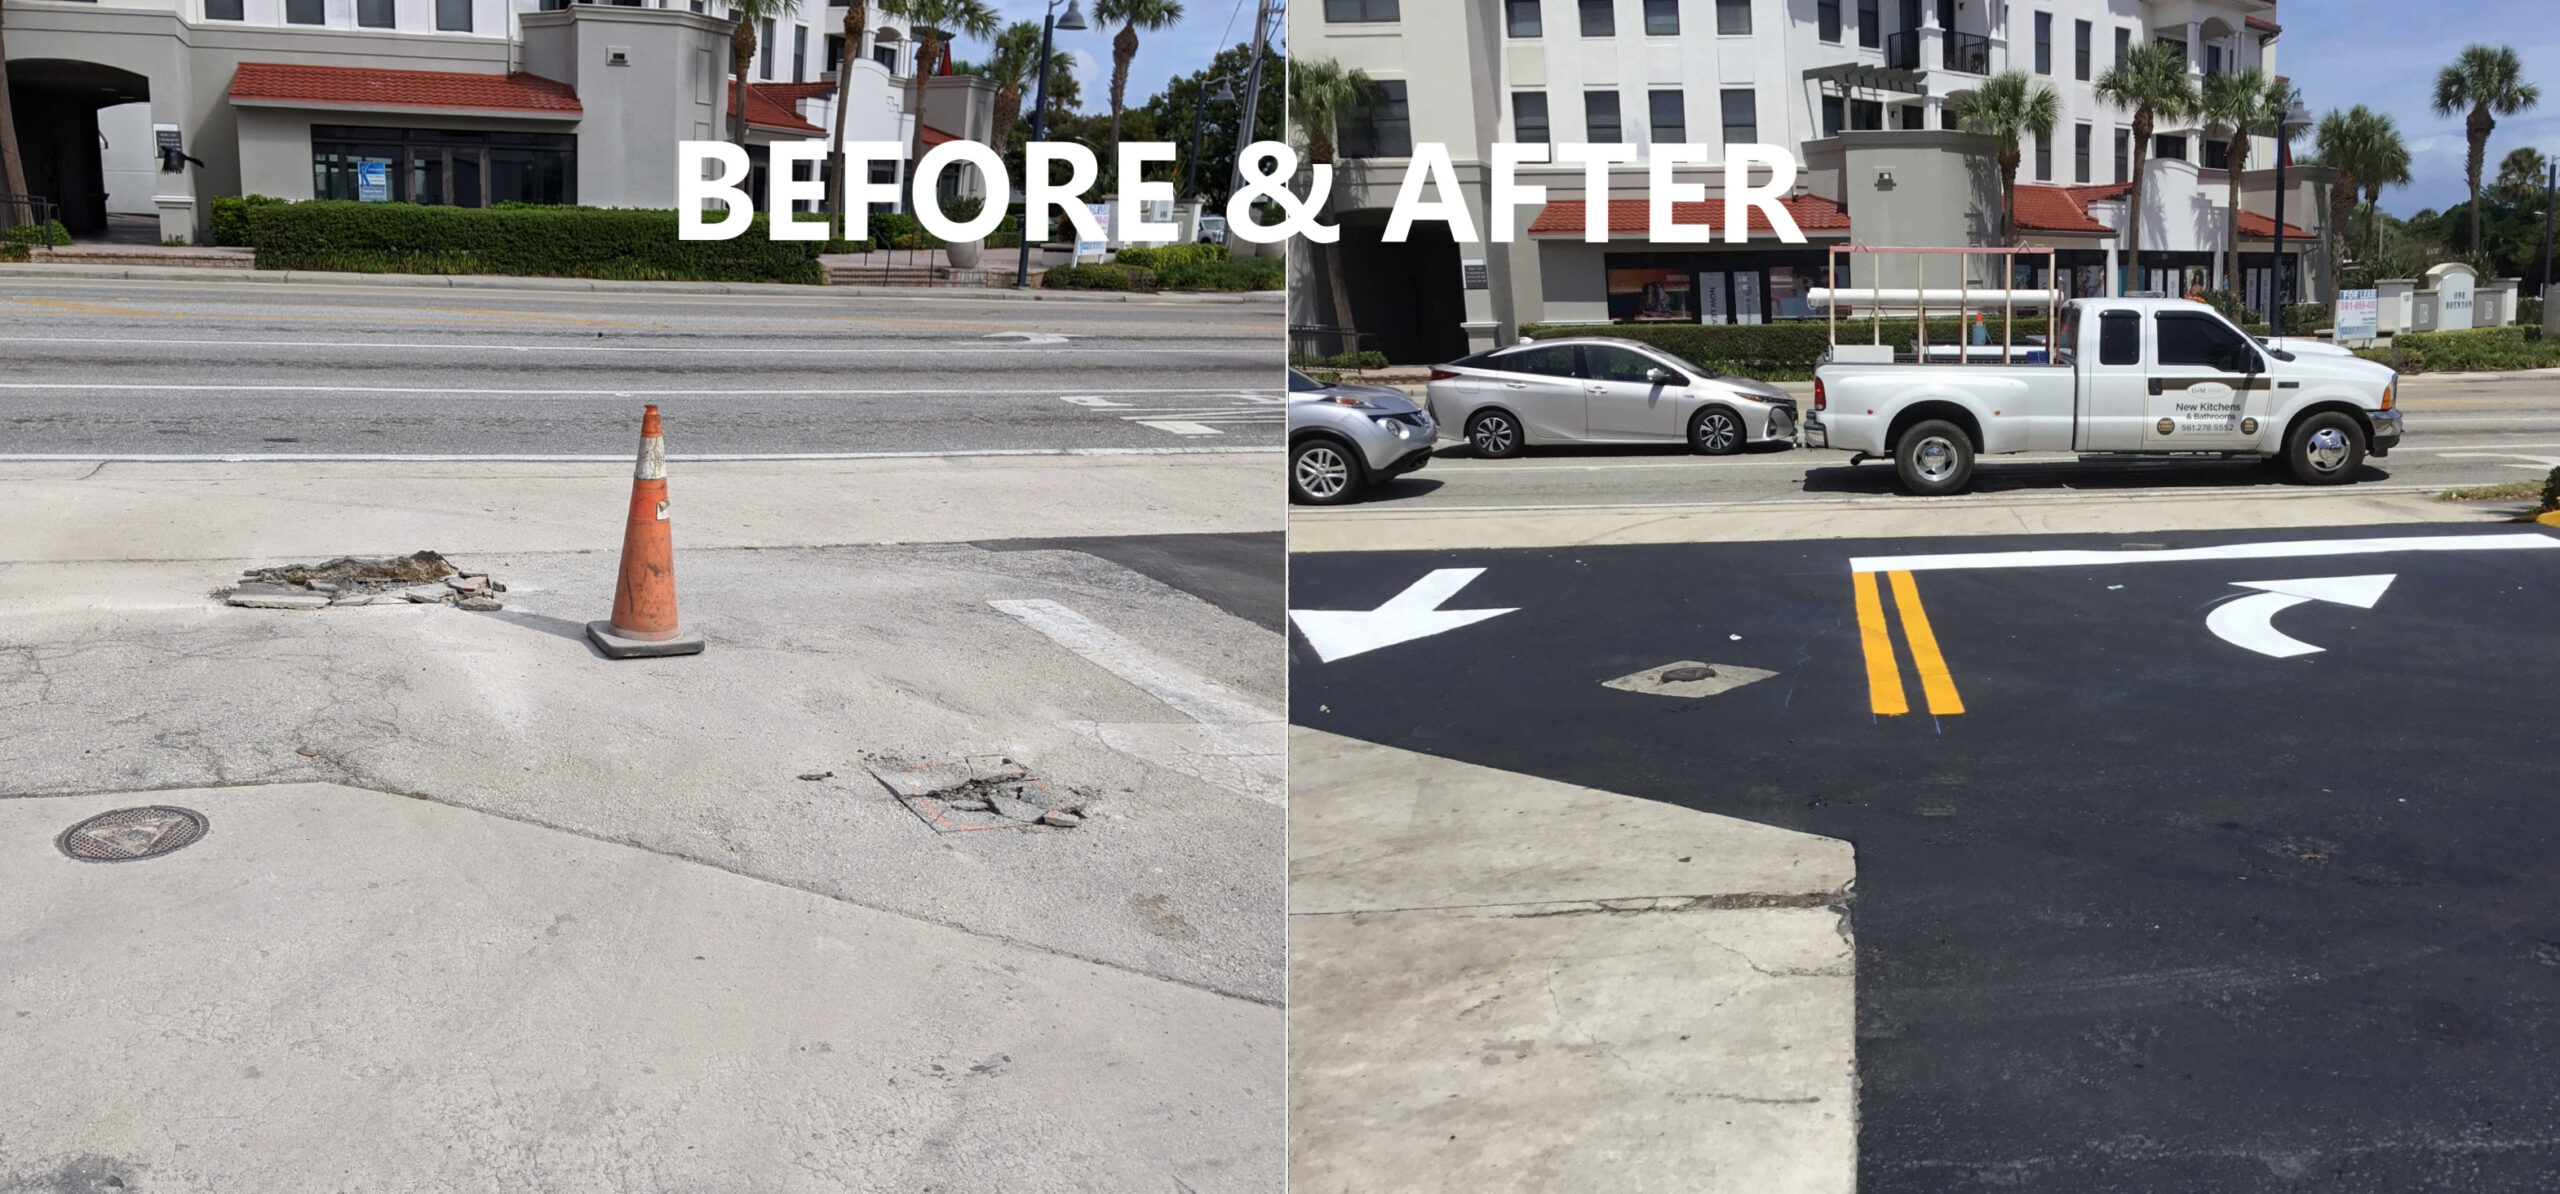 asphalt repair before and after